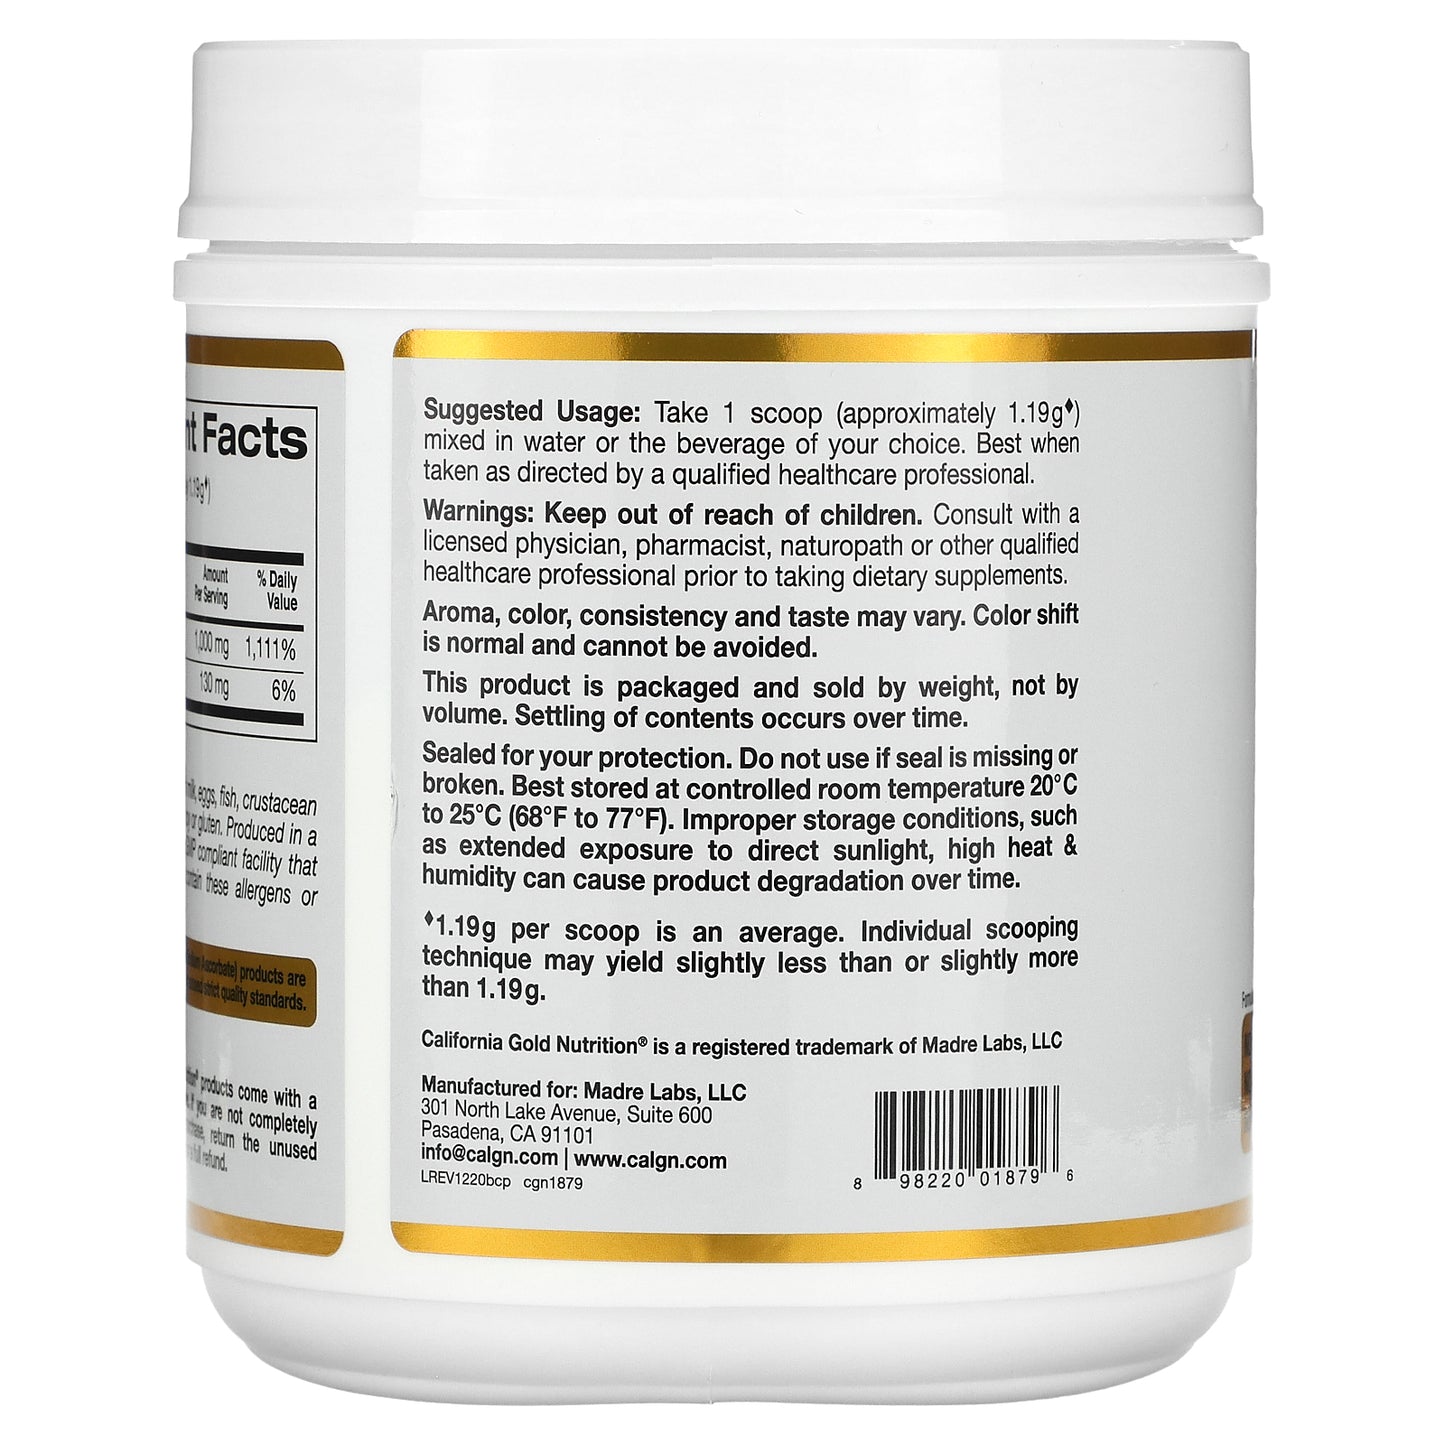 California Gold Nutrition, Buffered Gold C, Non-Acidic Vitamin C Powder, Sodium Ascorbate, 2.2 lb (1 kg)